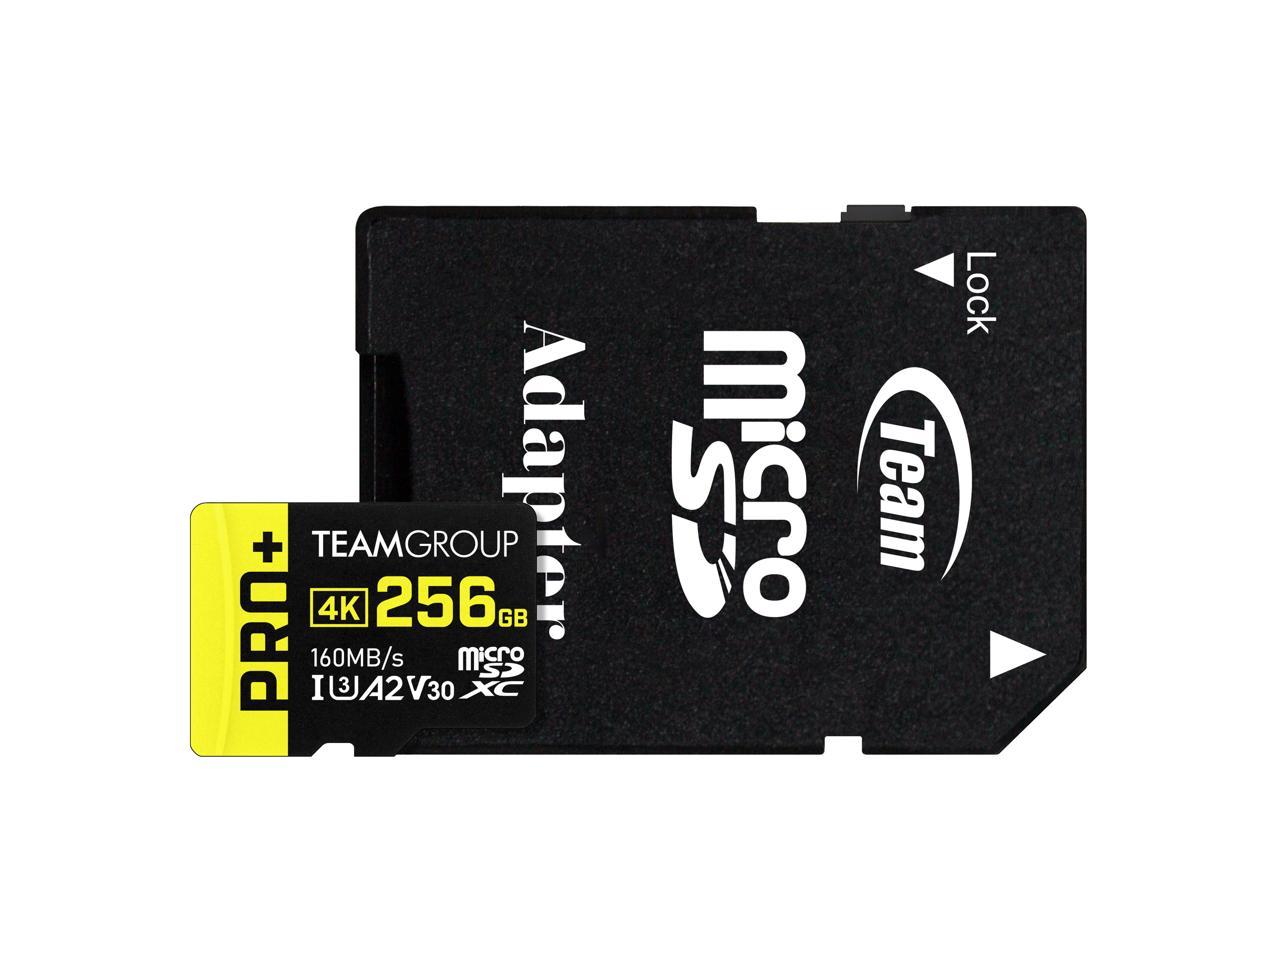 256GB Team PRO+ microSD XC U3 A2 V30 Memory Card with Adapter @Newegg $14.49